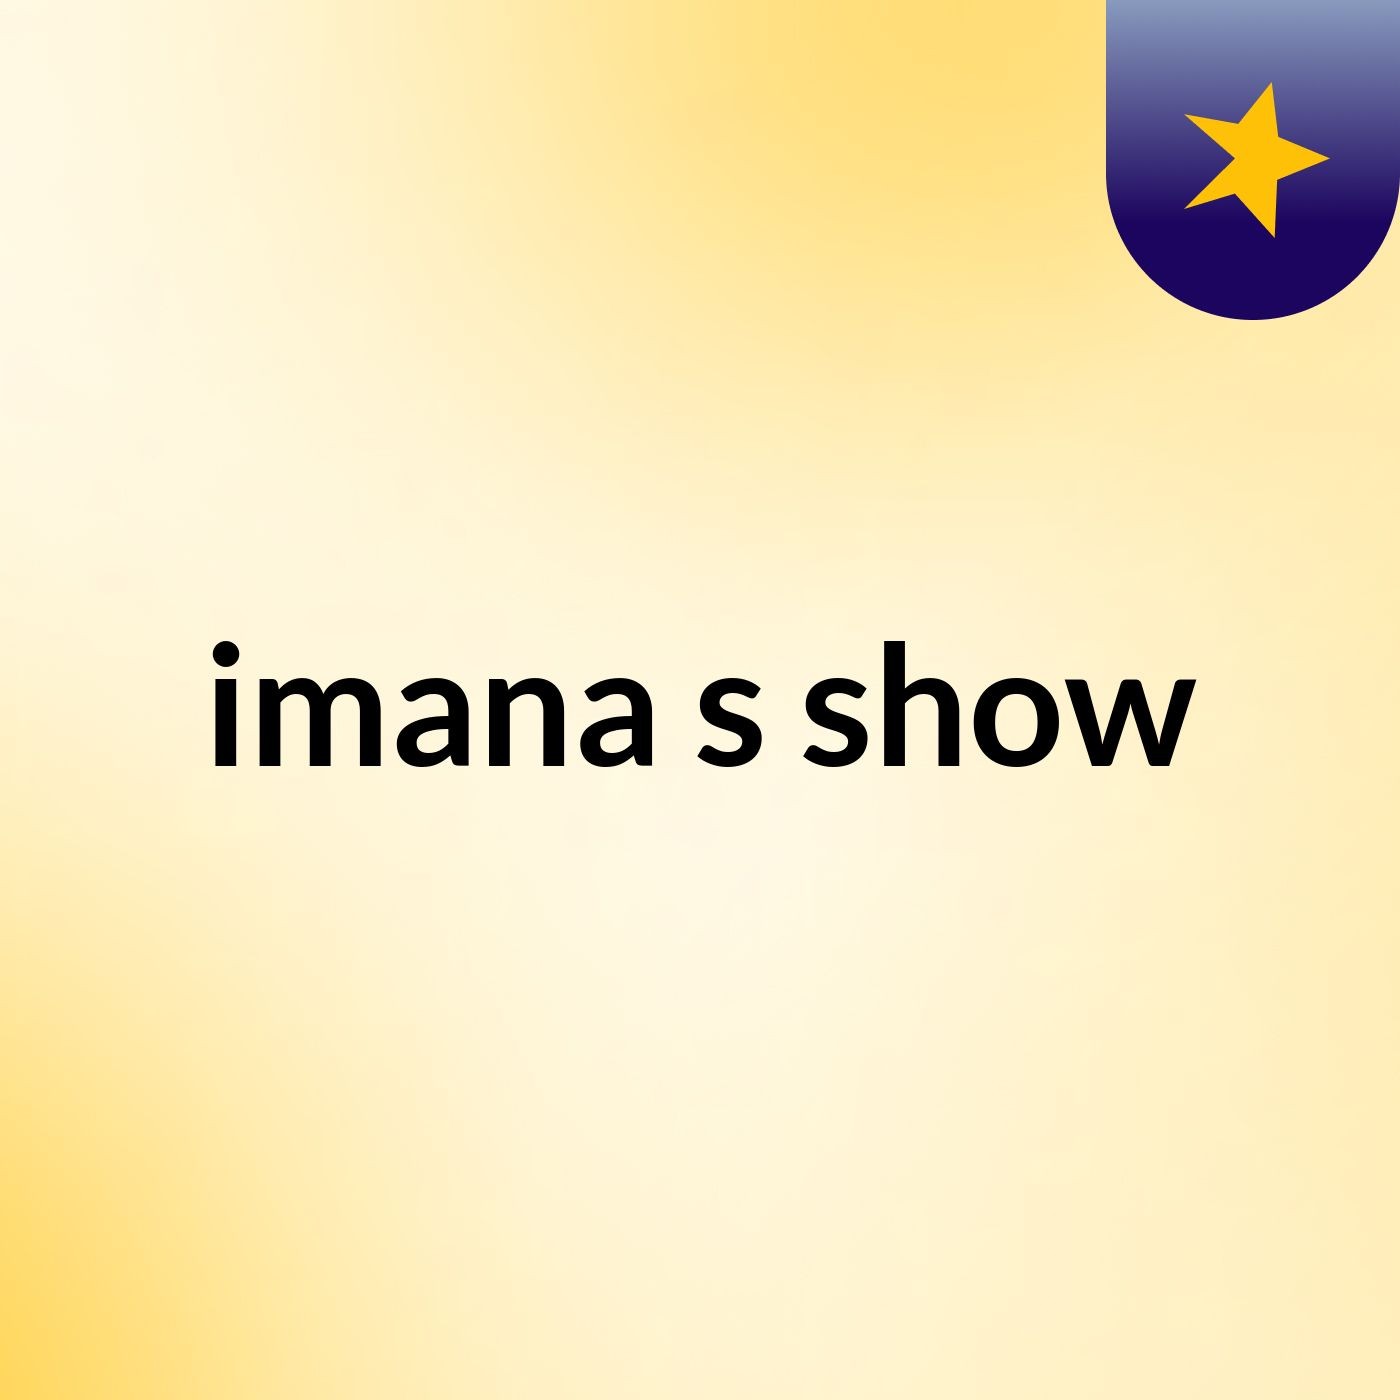 imana's show